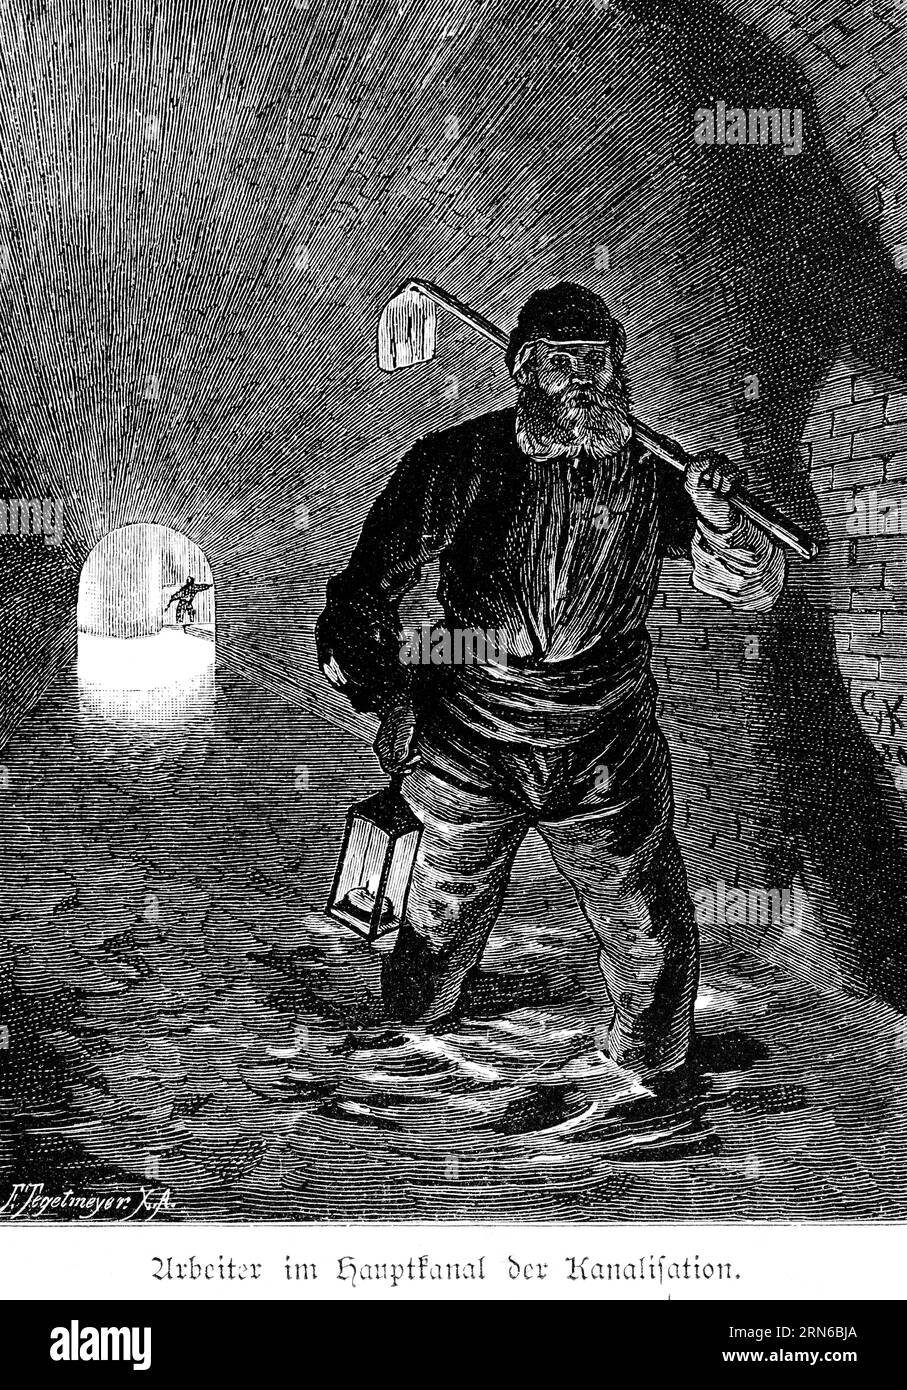 Worker in the main sewer, Berlin, lantern, light, hoe, tunnel, darkness, underground, stone walls, Germany, historical illustration around 1898 Stock Photo